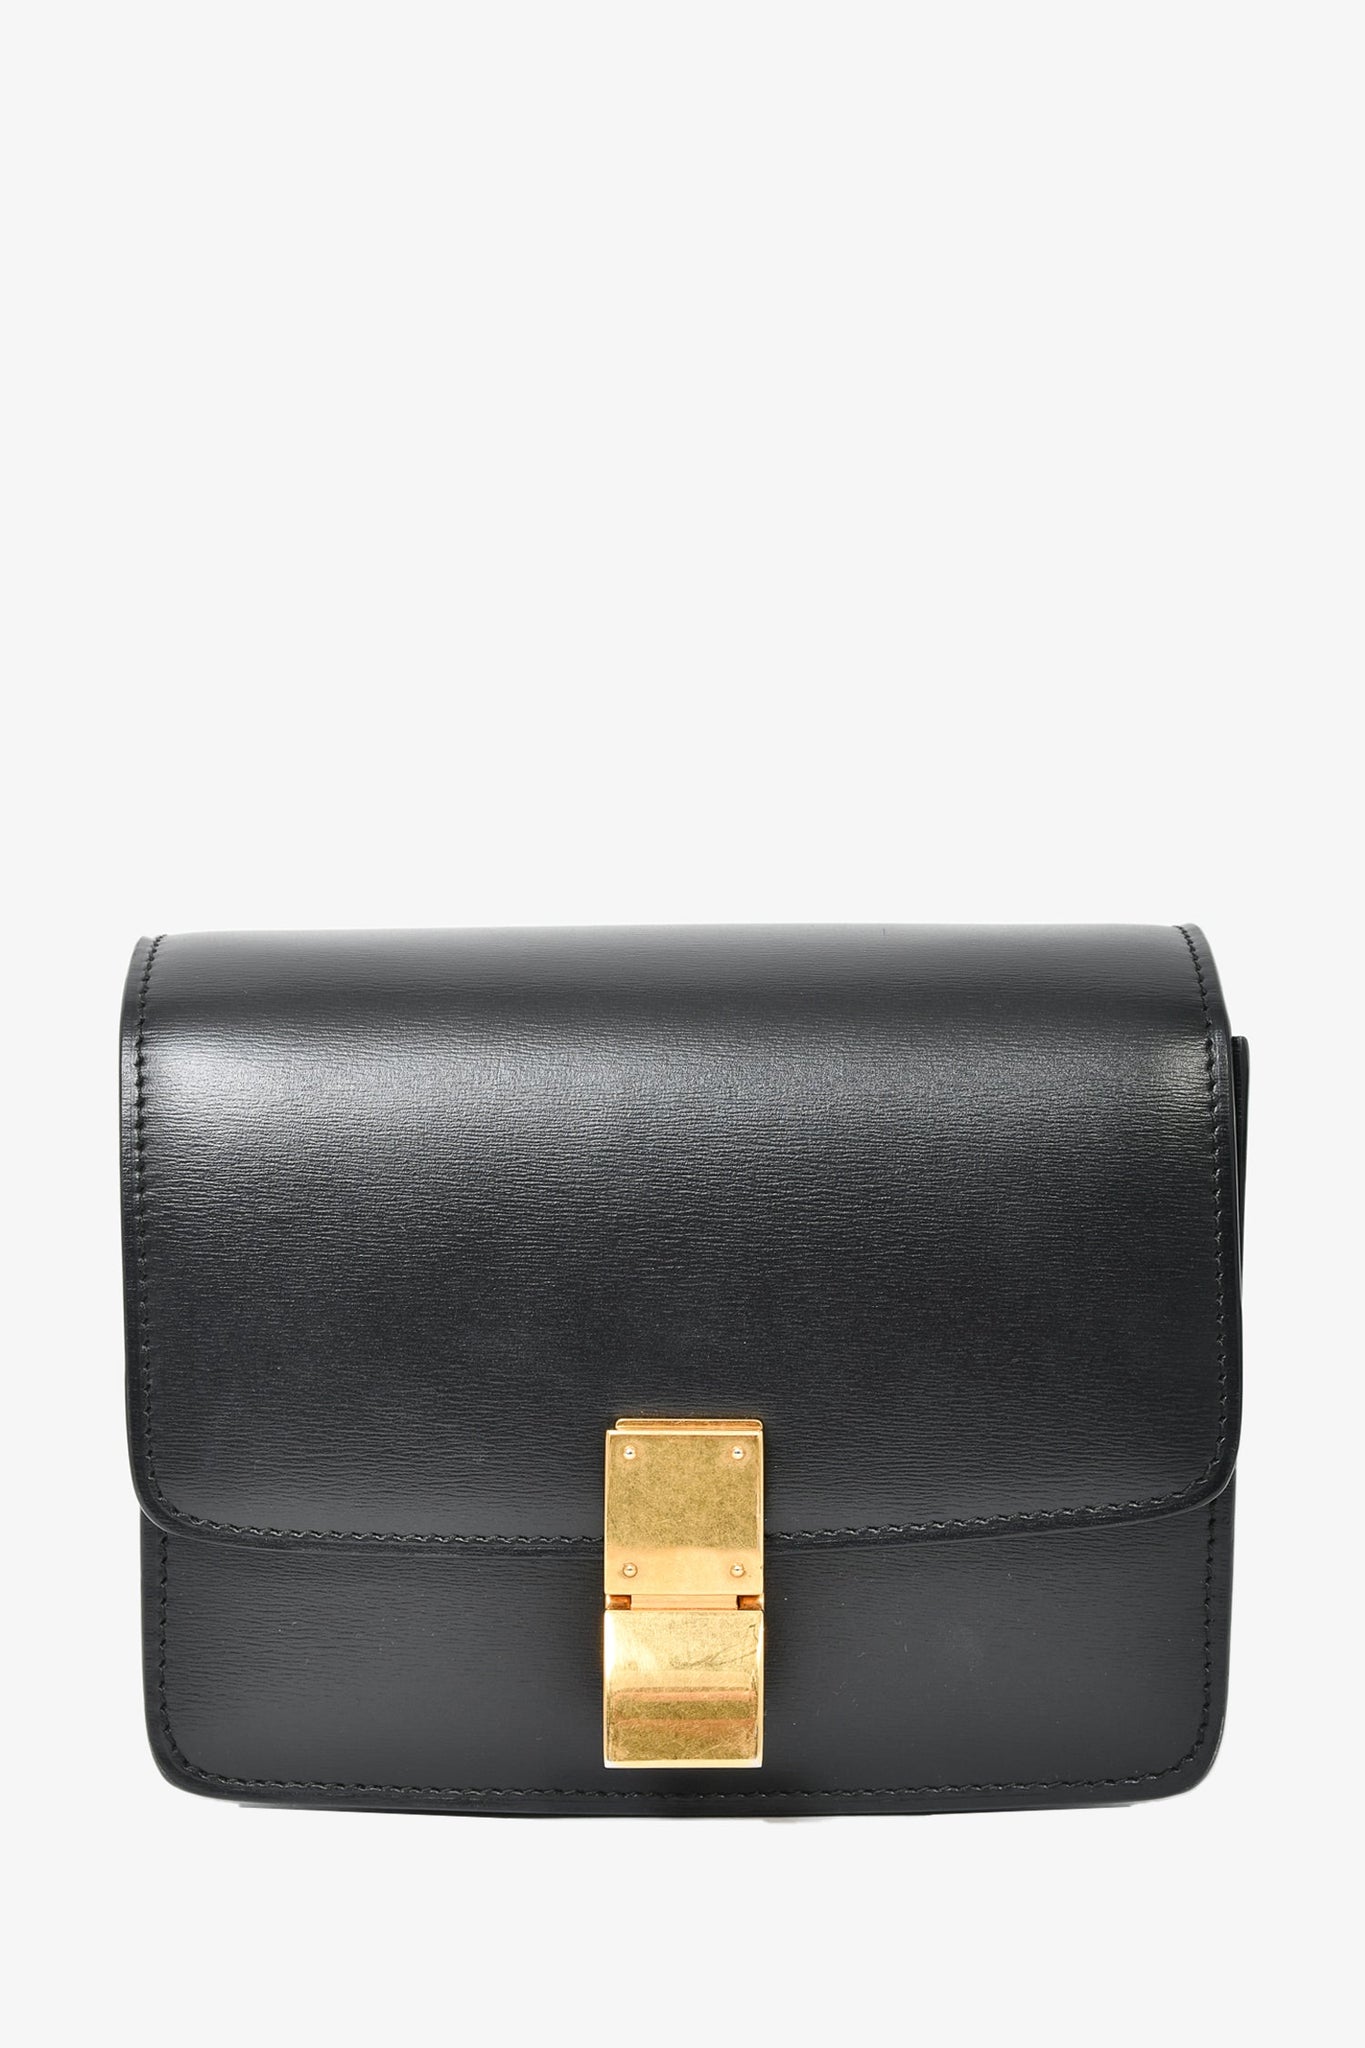 Celine Black Leather Small Box Crossbody Bag